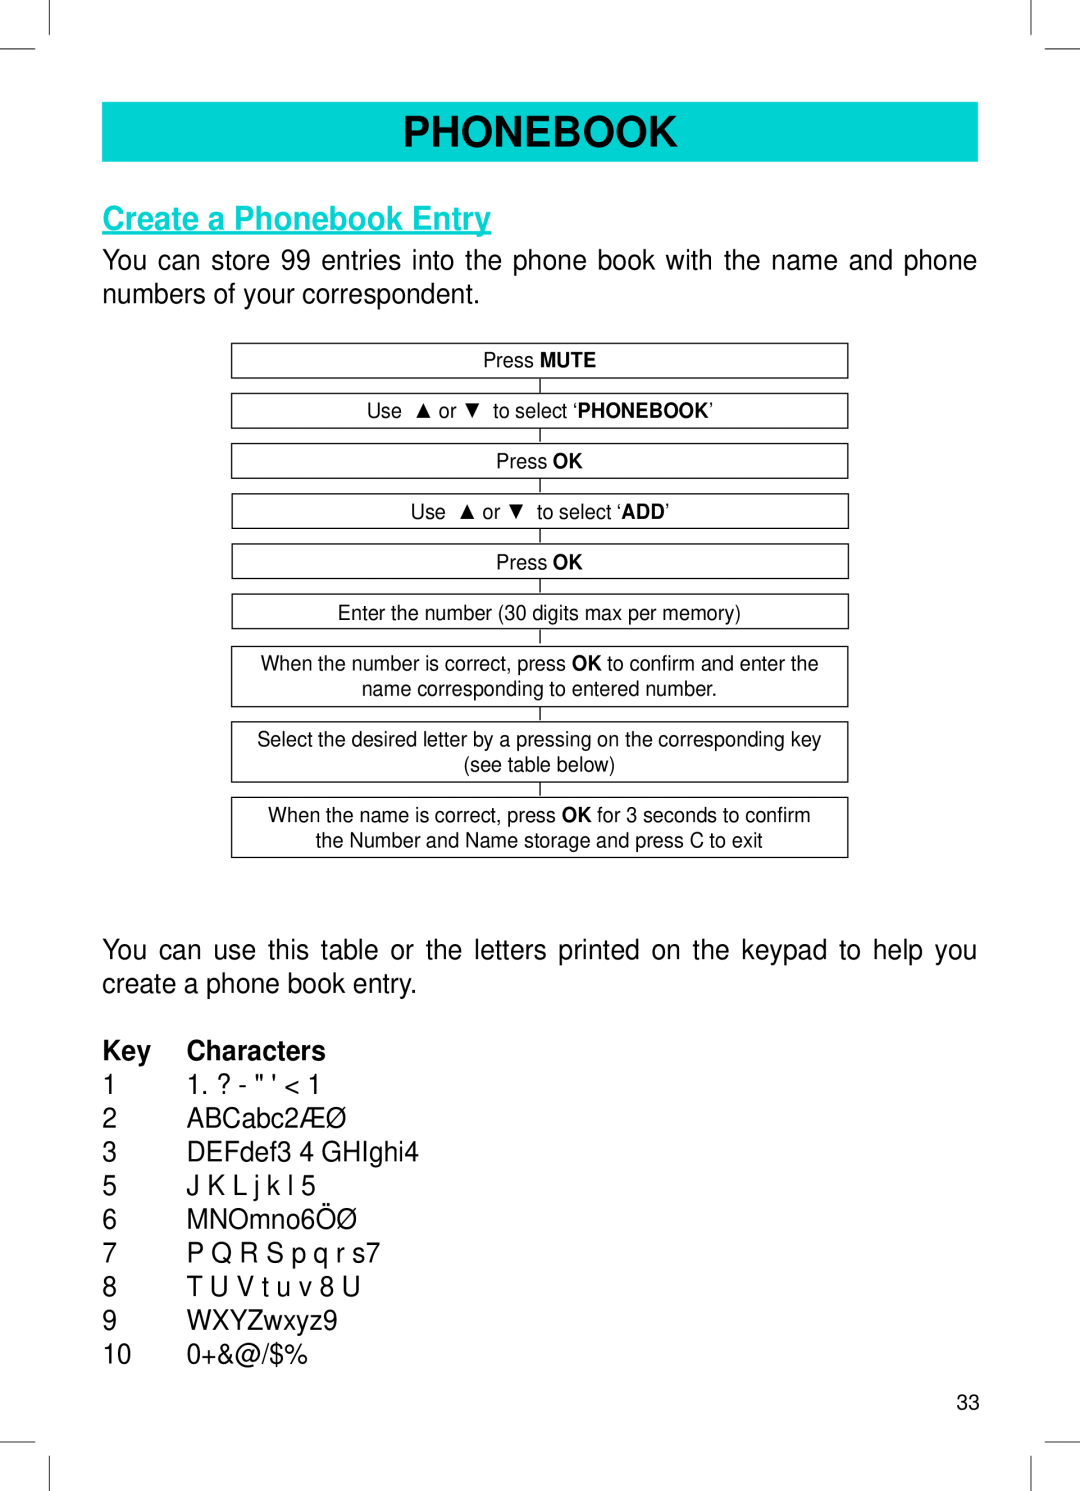 Geemarc AMPLI600 manual Create a Phonebook Entry, Key Characters 